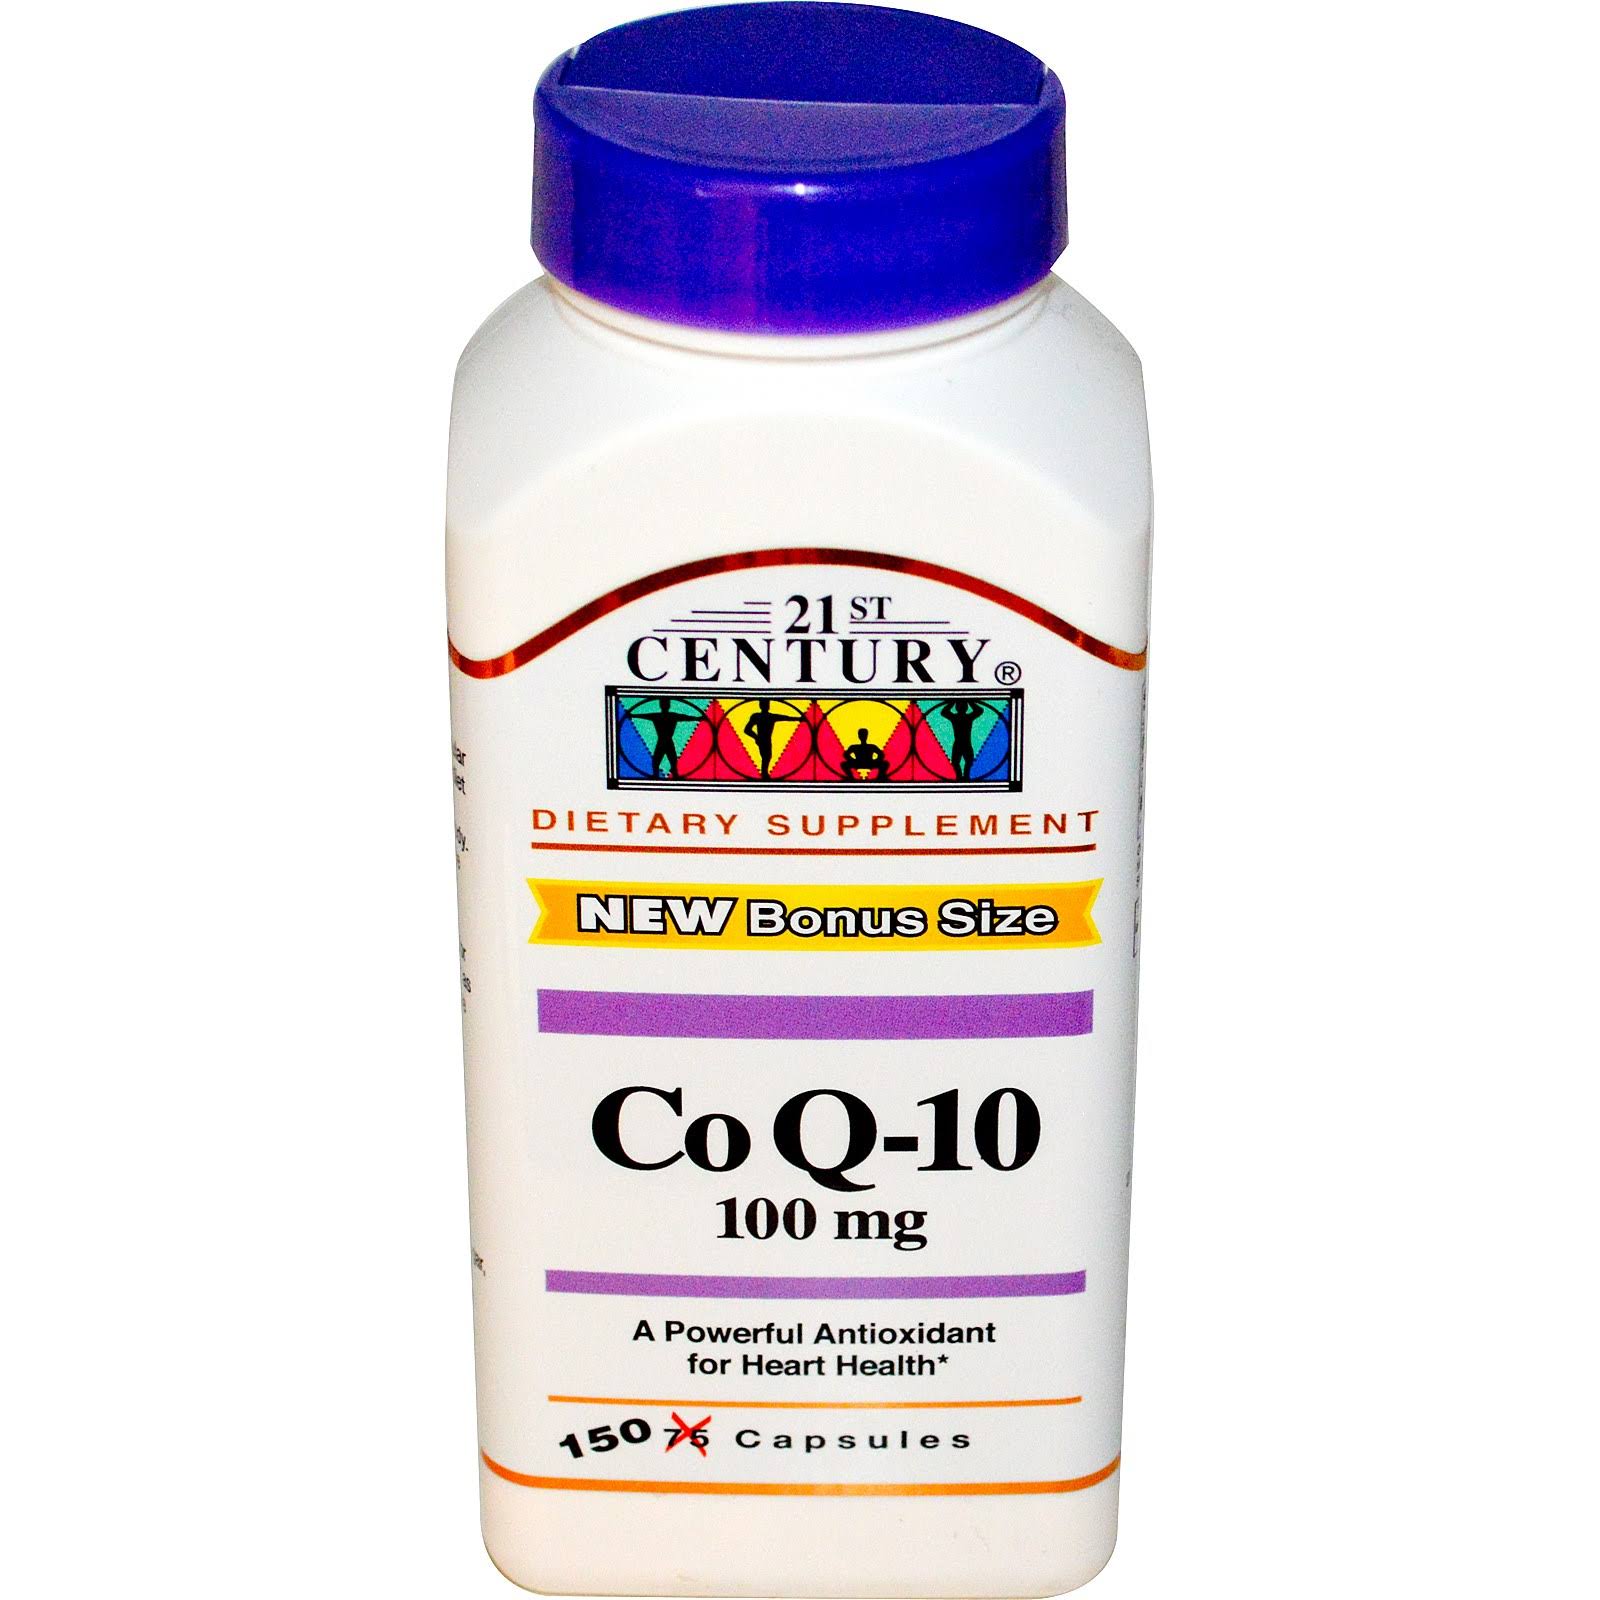 21st Century Co Q-10 Supplement - 100mg, 150 Capsules